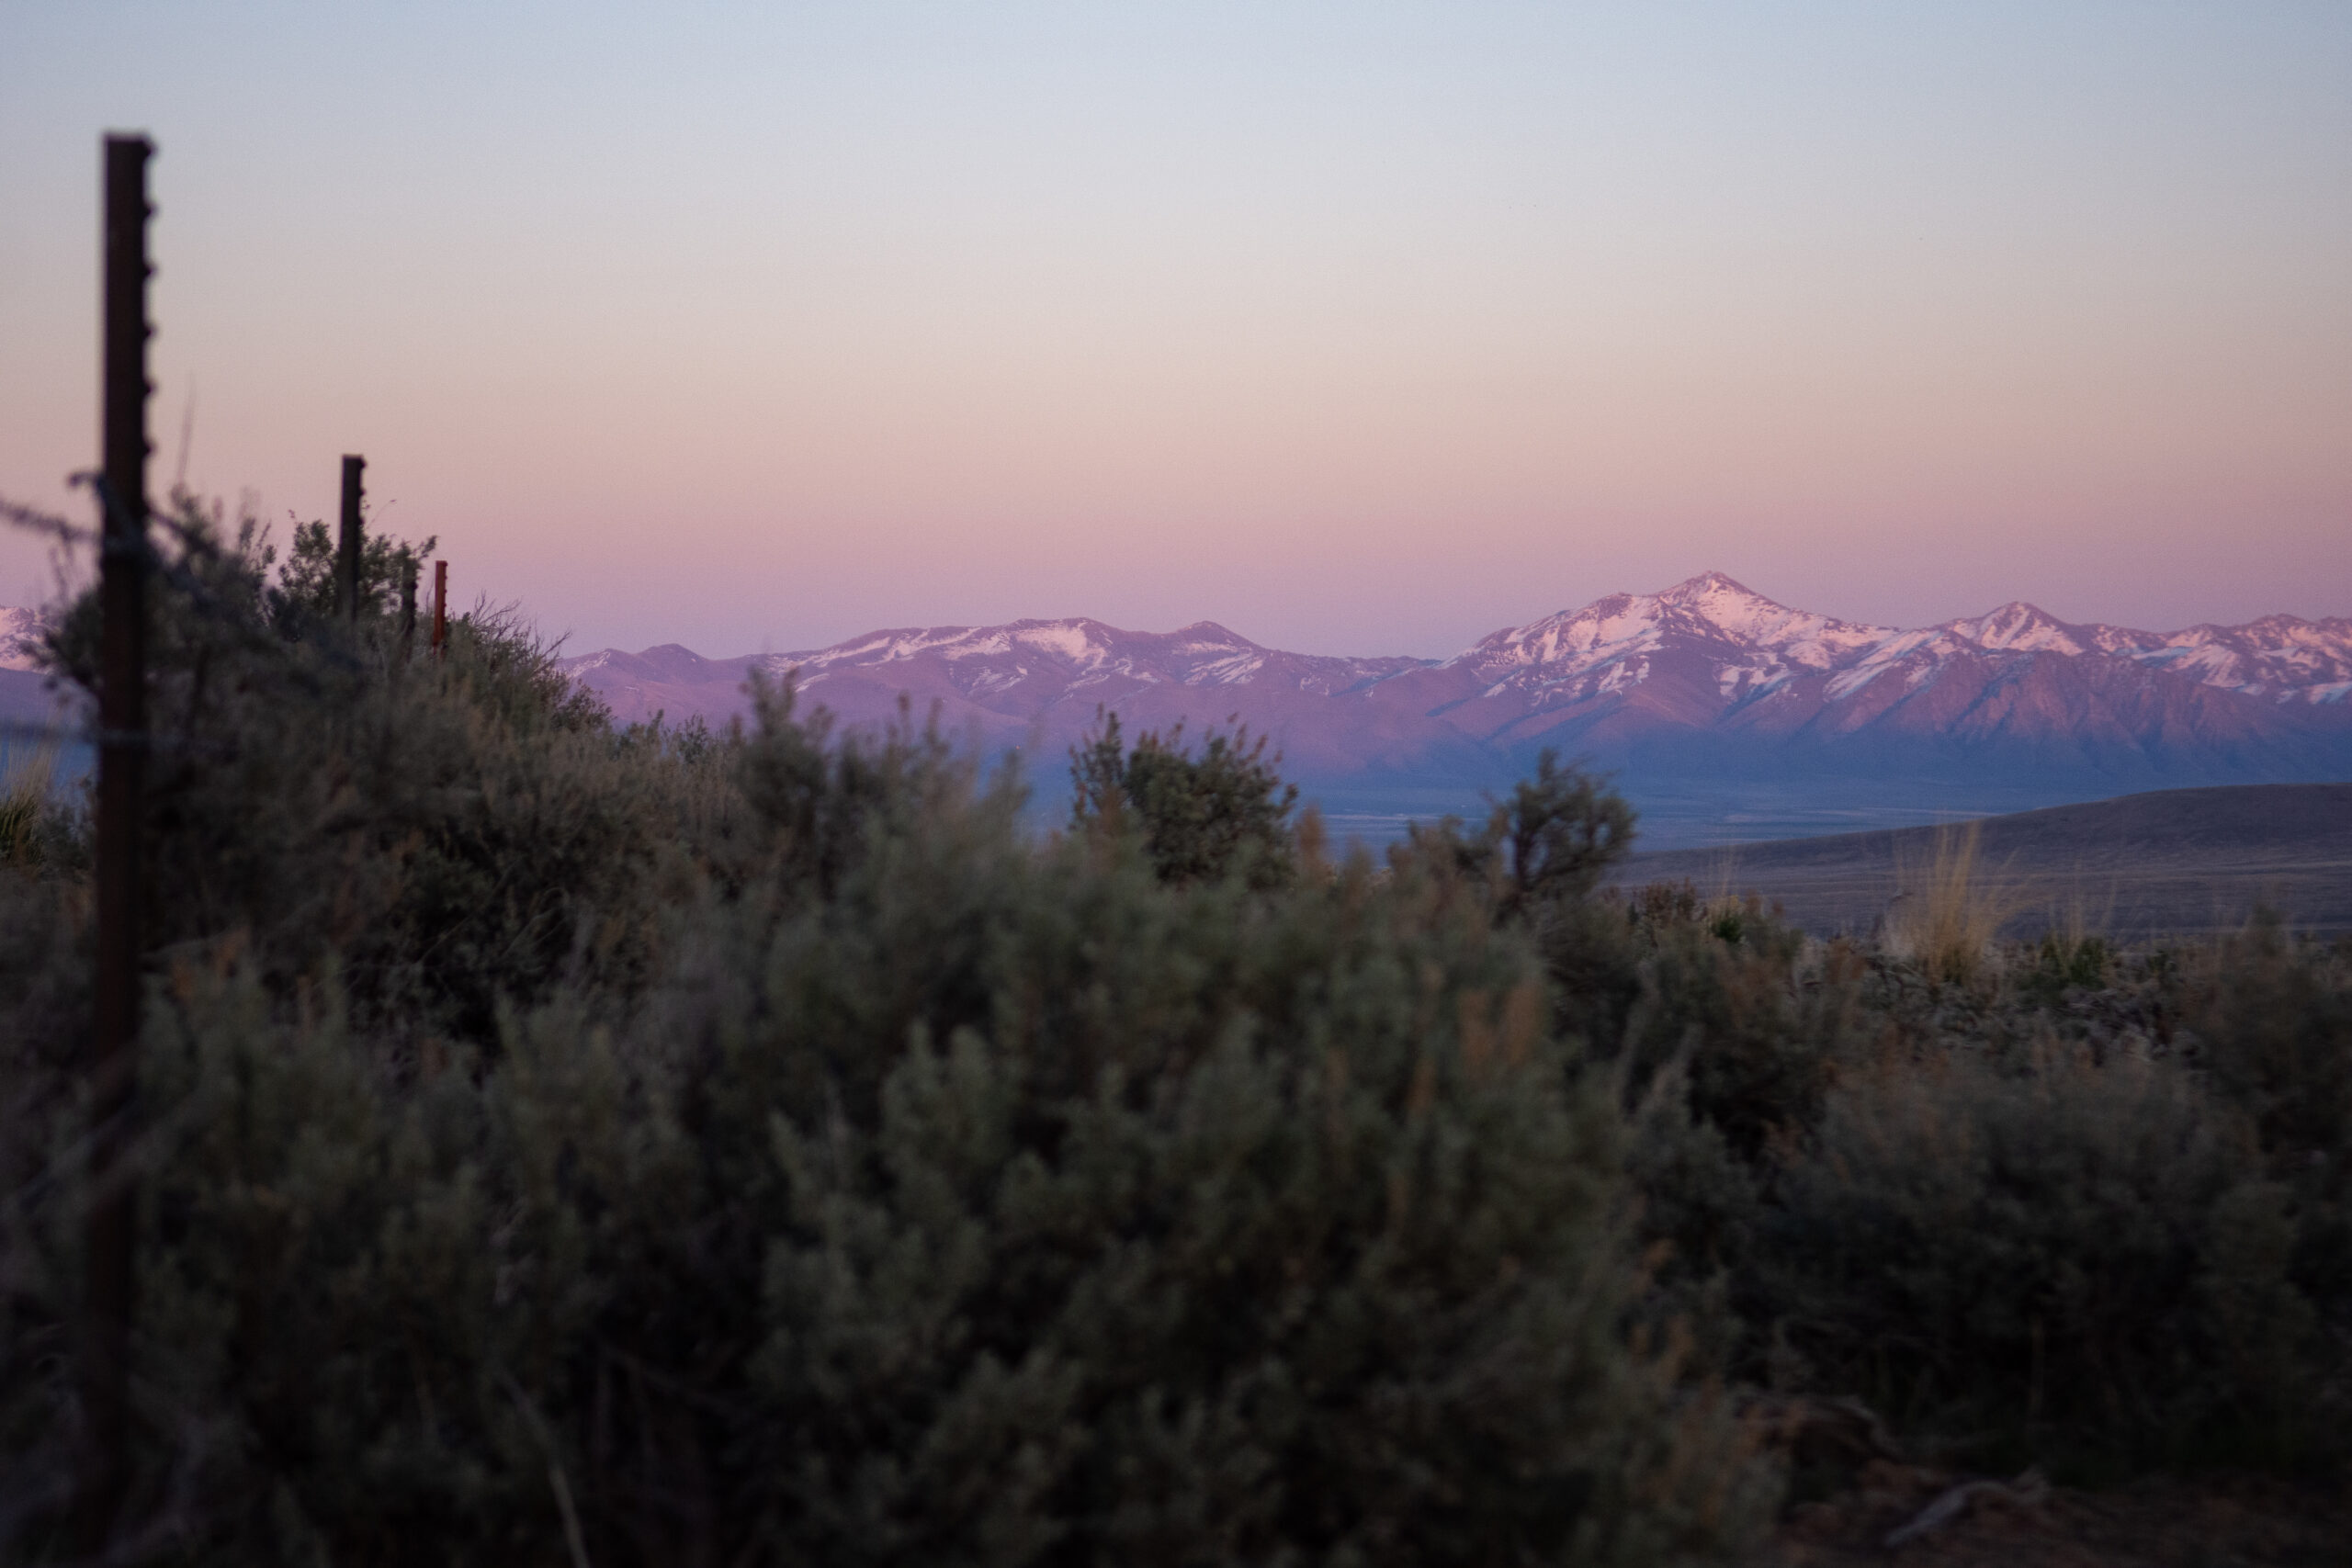 Sagebrush near the Protect Thacker Pass encampment at sunset on April 17, 2021. (David Calvert/The Nevada Independent).